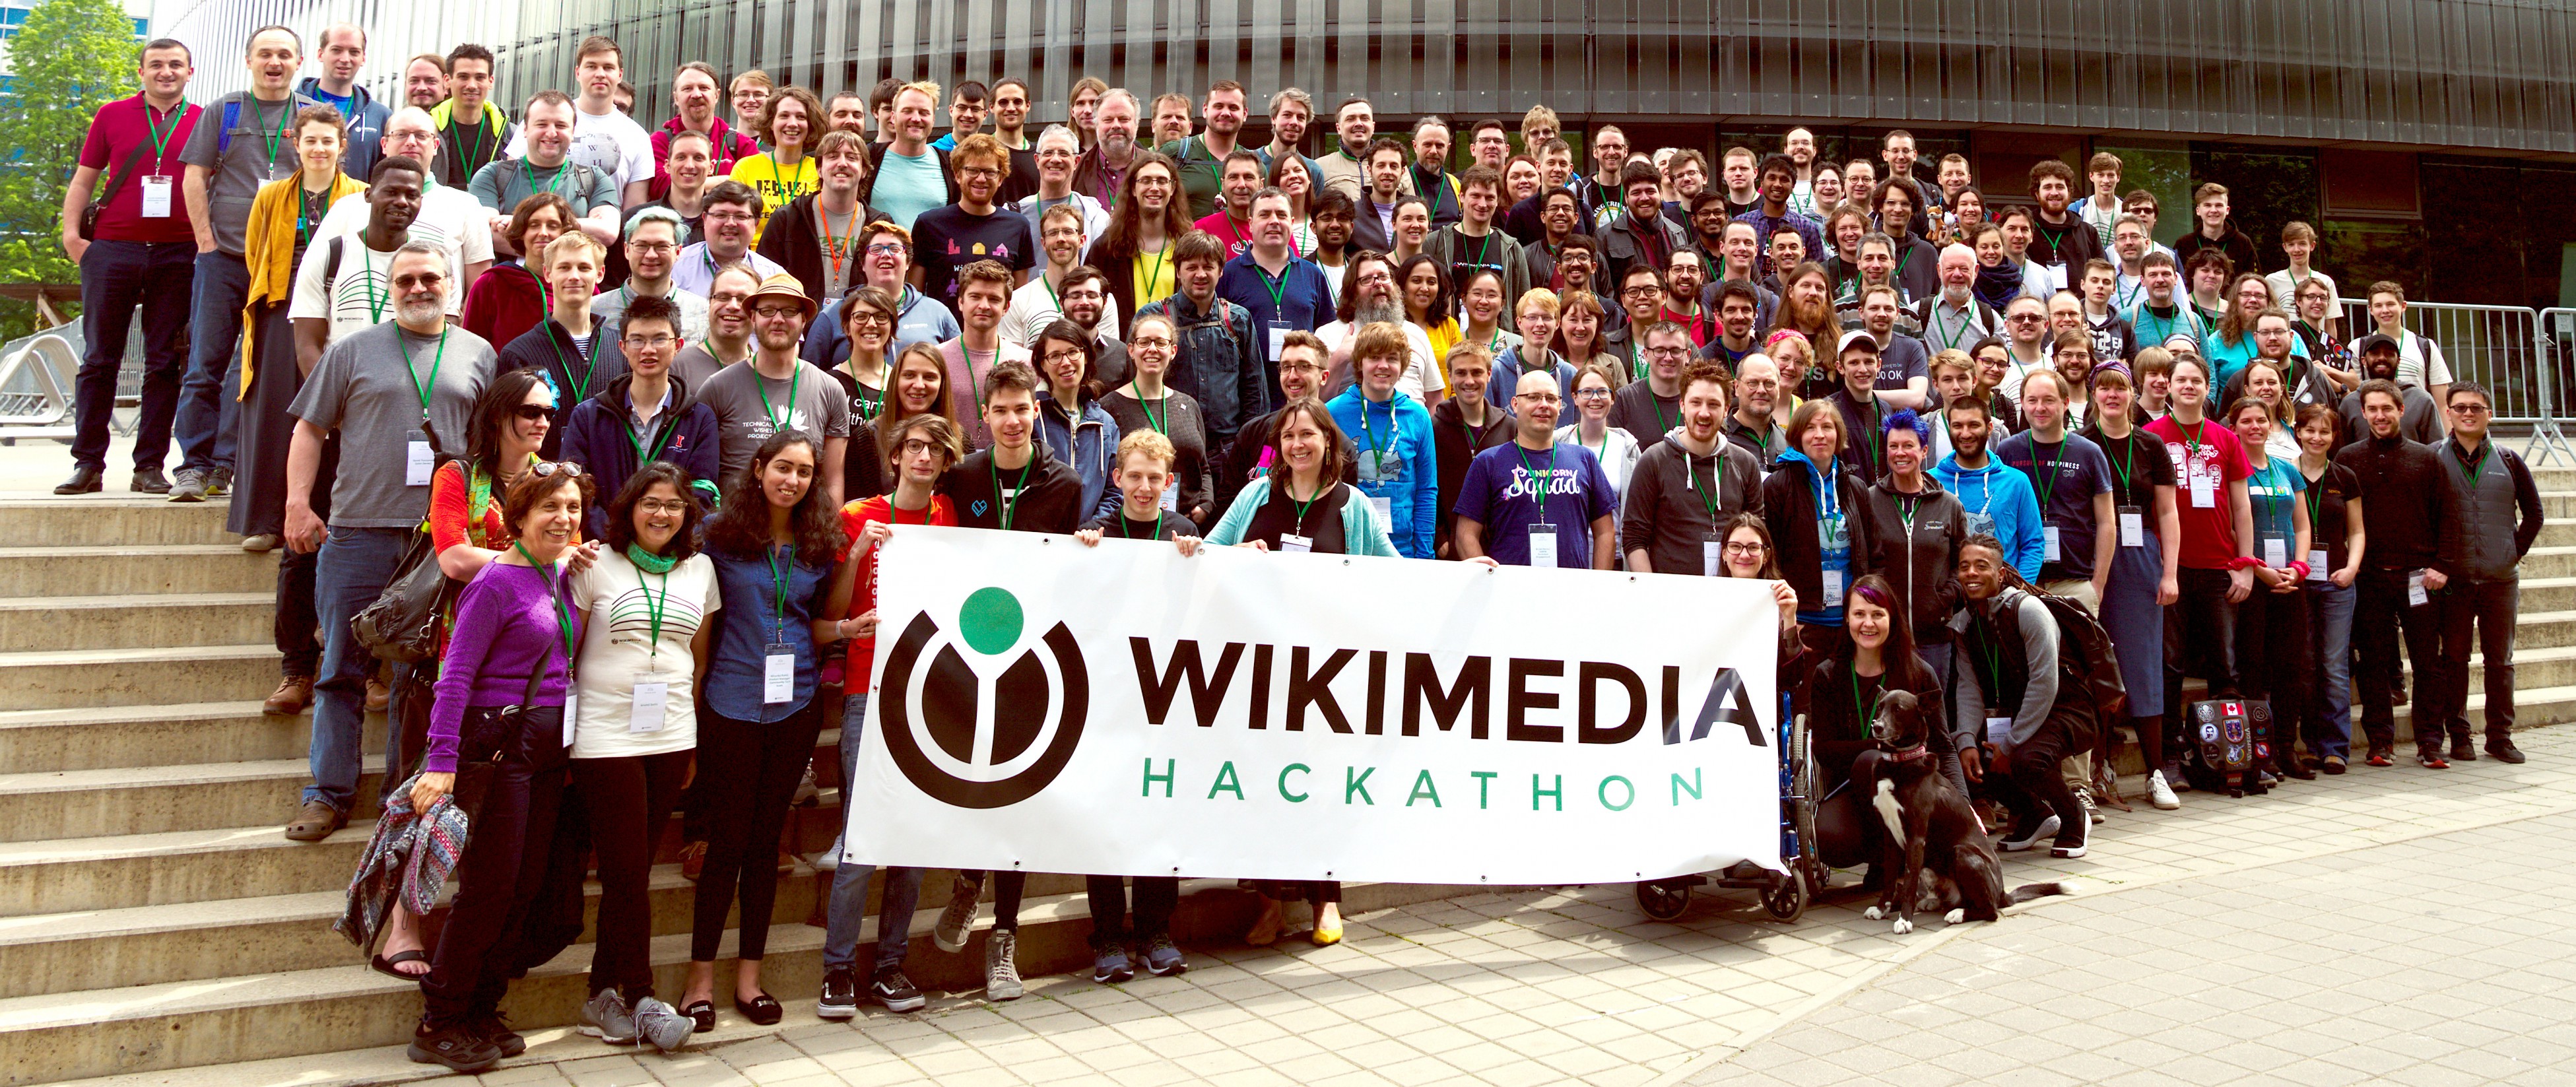 Wikimedia Hackathon 2019, Group Pic